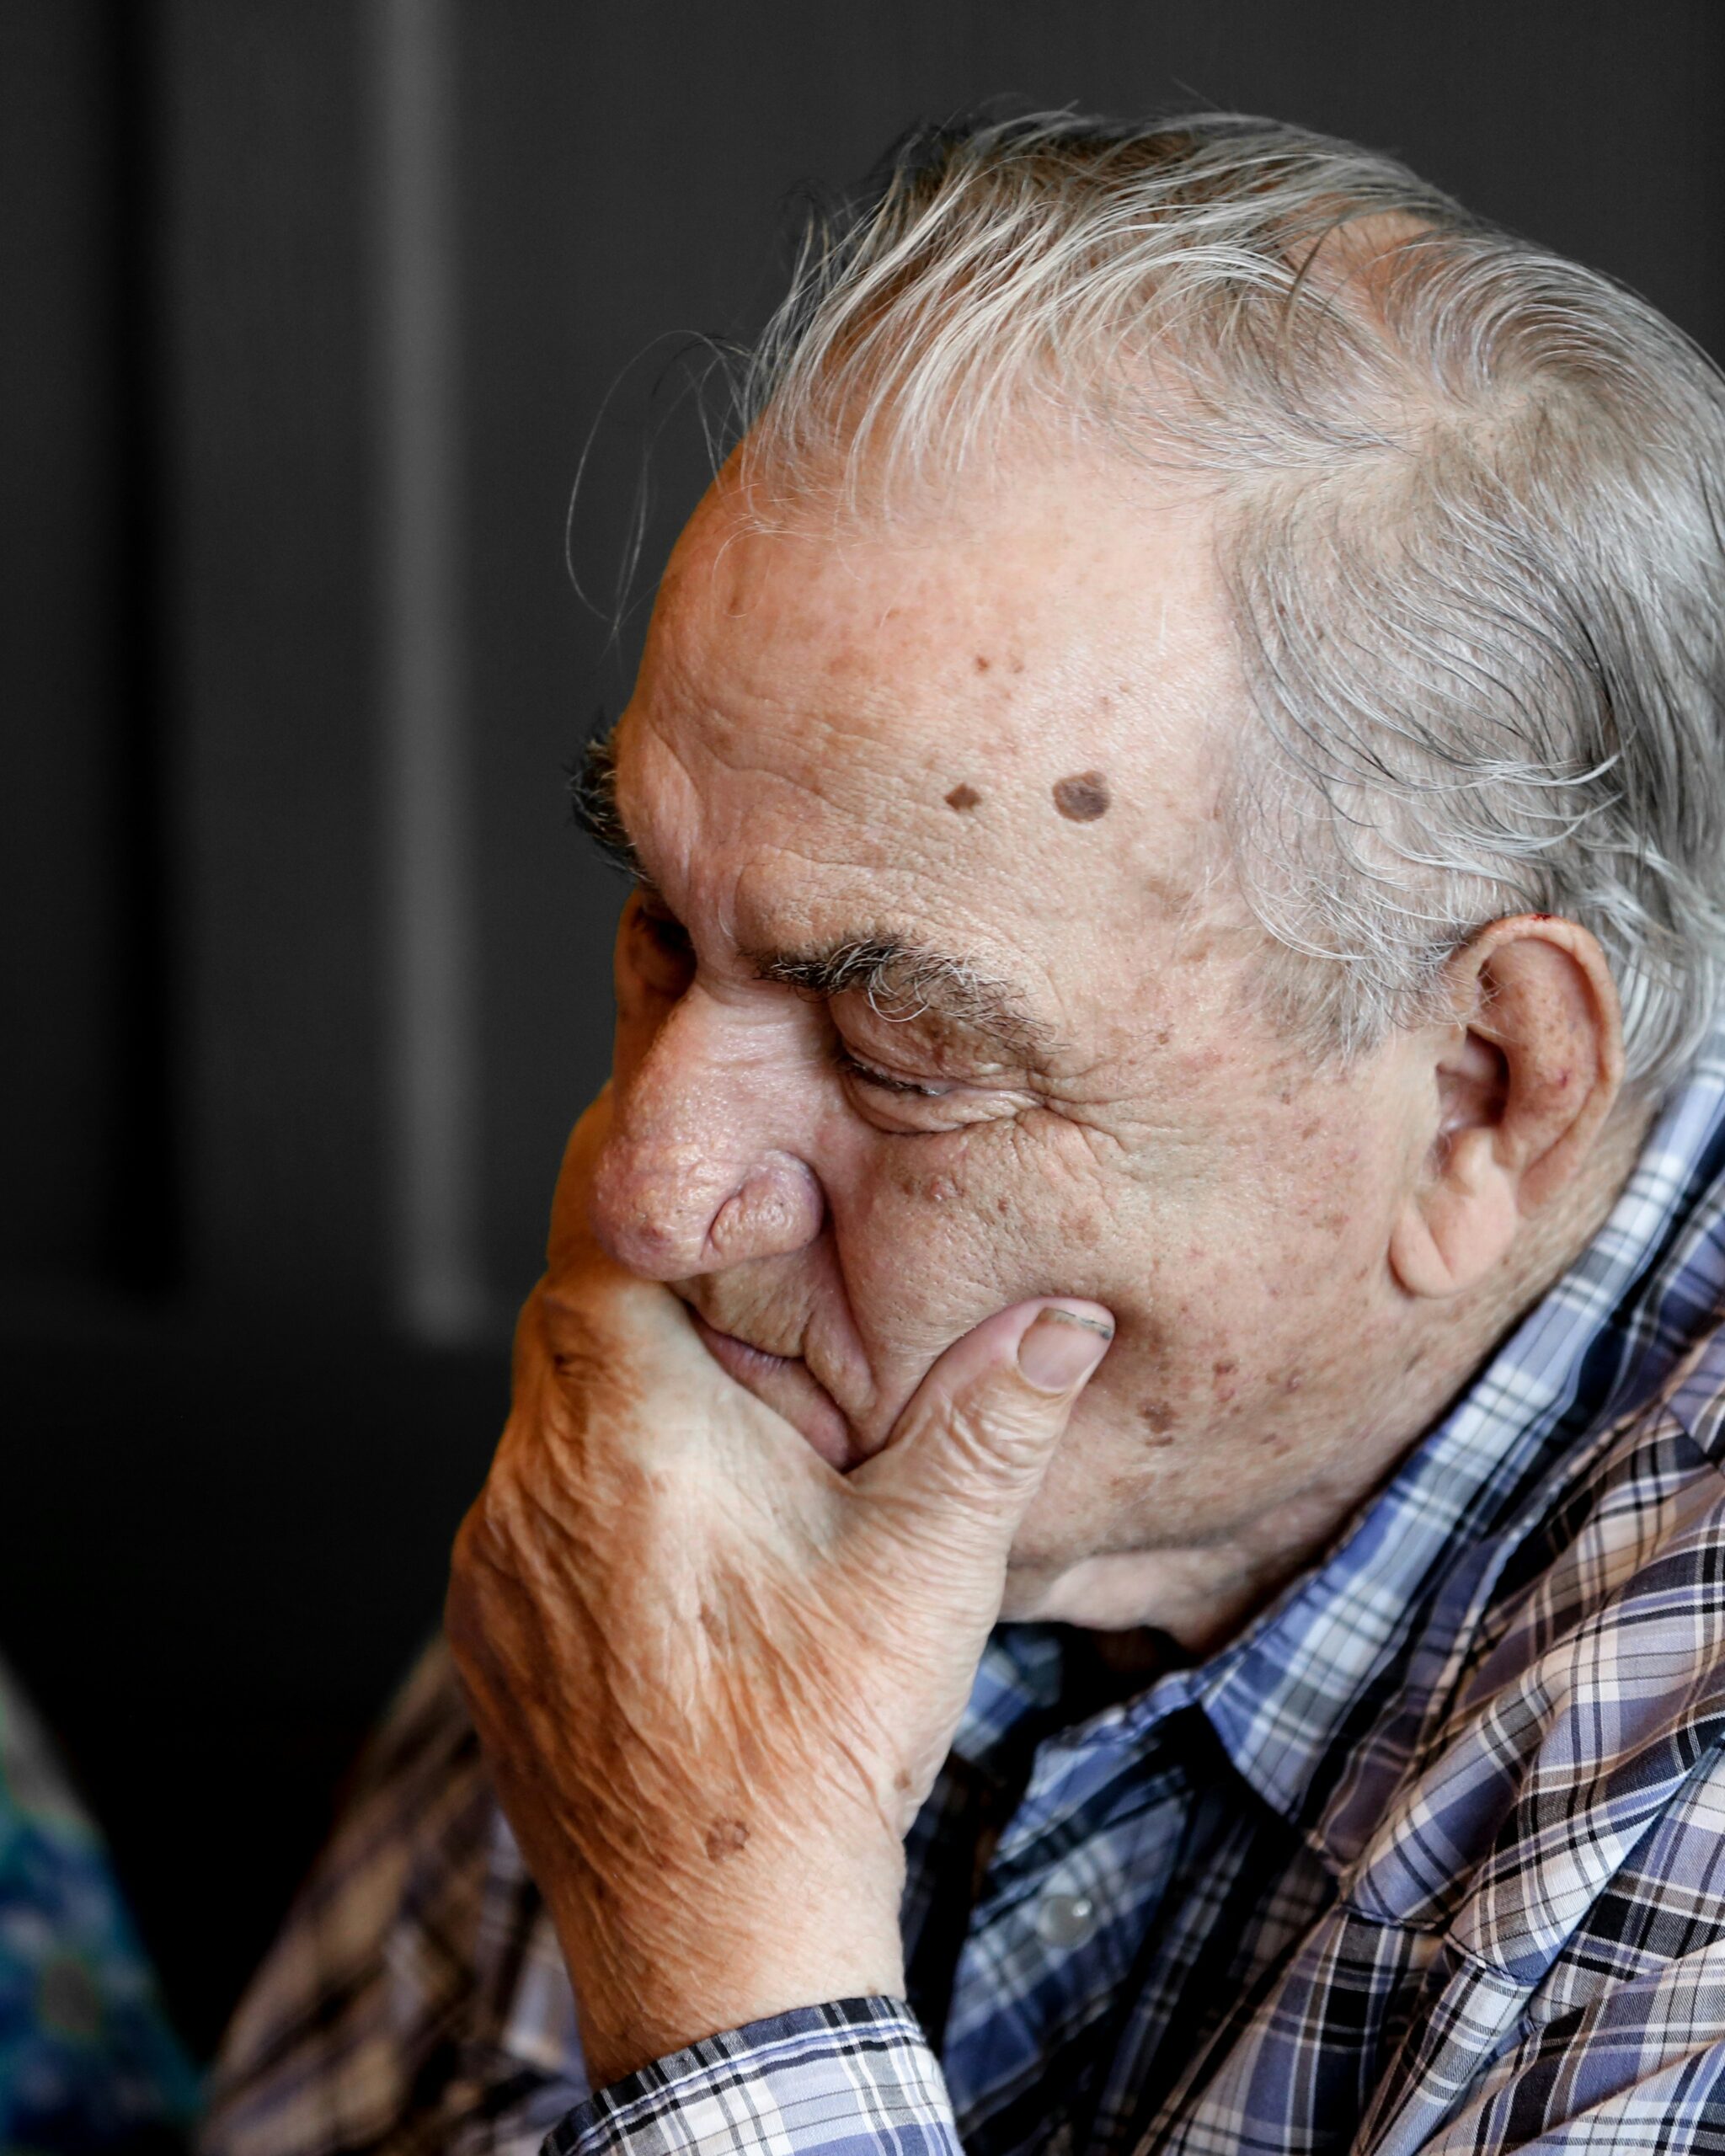 Elderly man holding chin